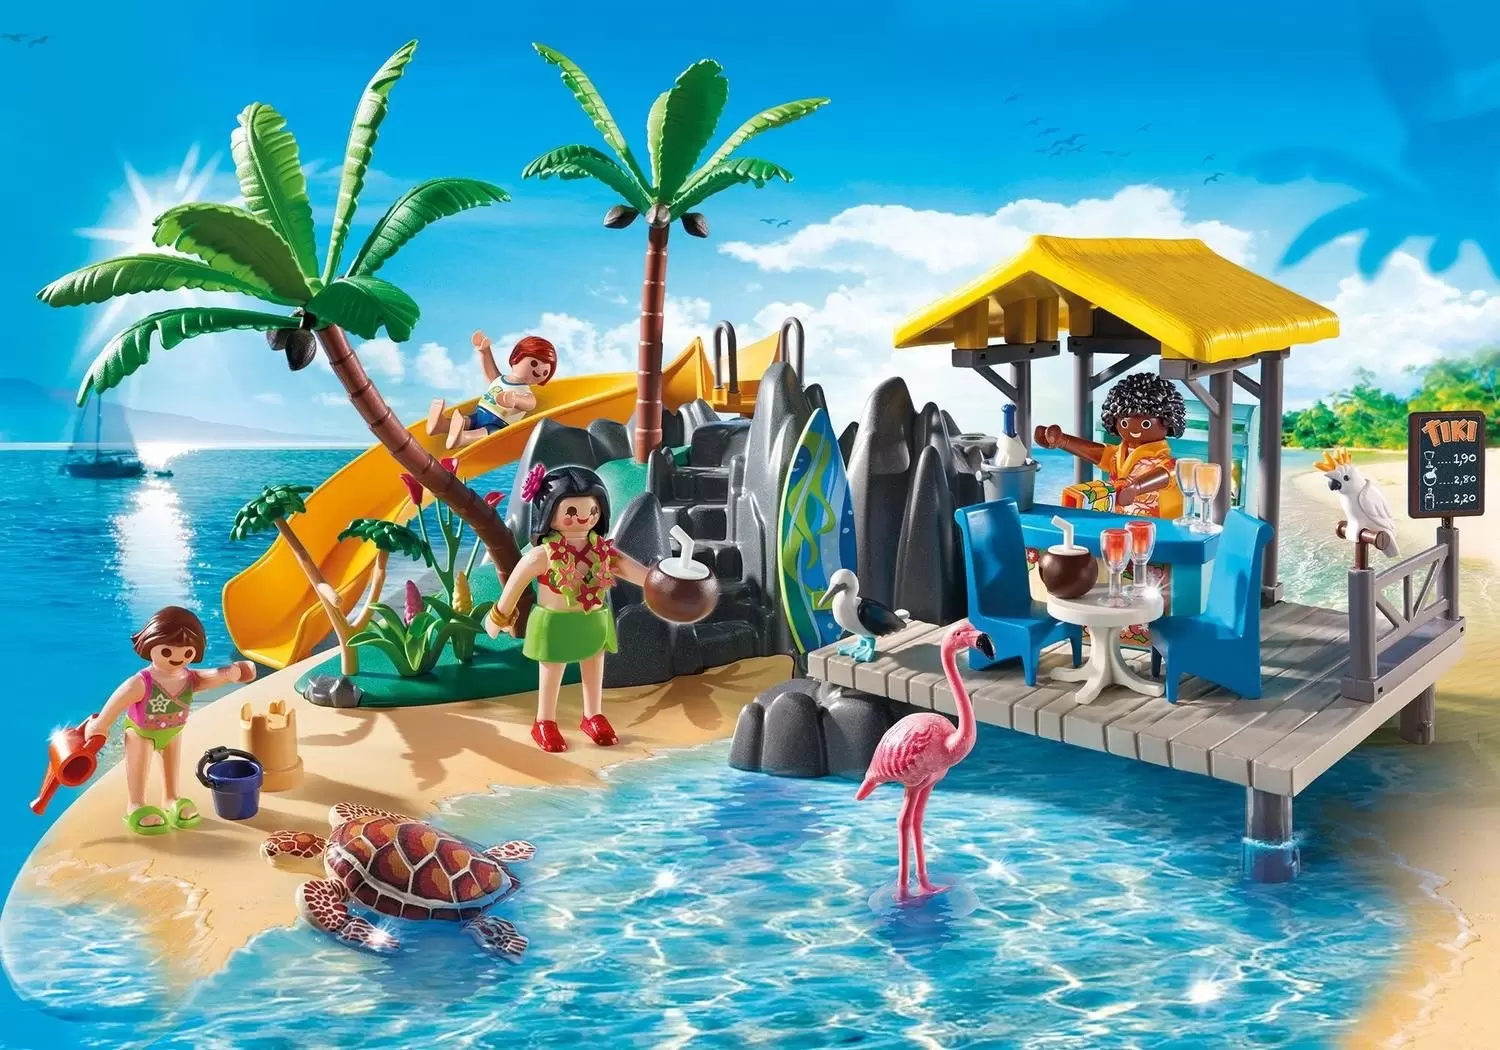 Playmobil on Hollidays - Island Juice Bar